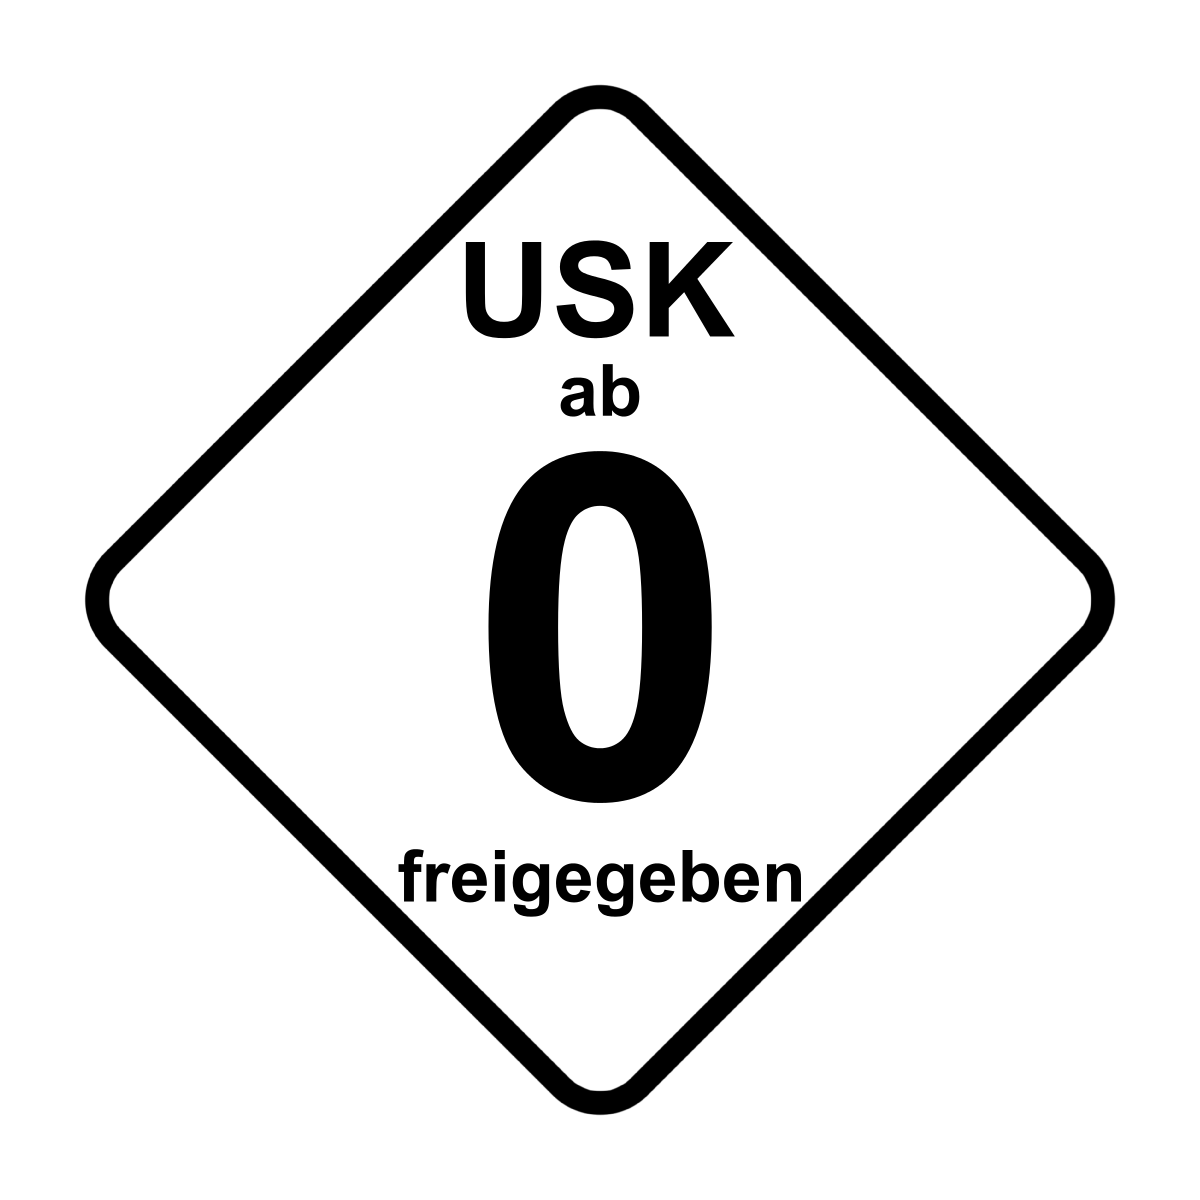 USK - 0 (Germany)